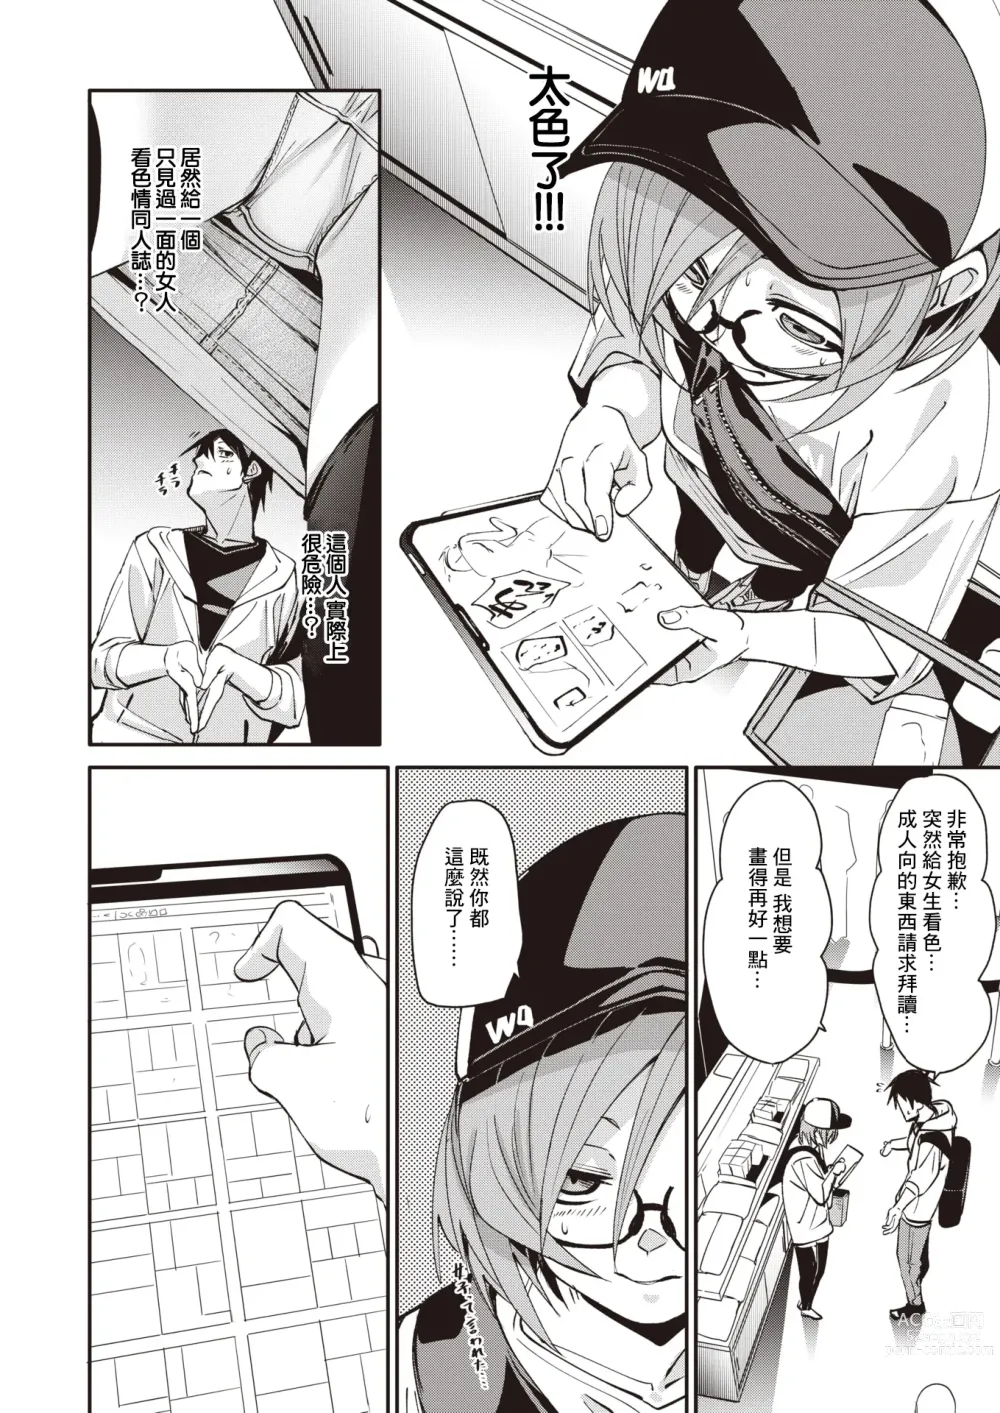 Page 6 of manga Event